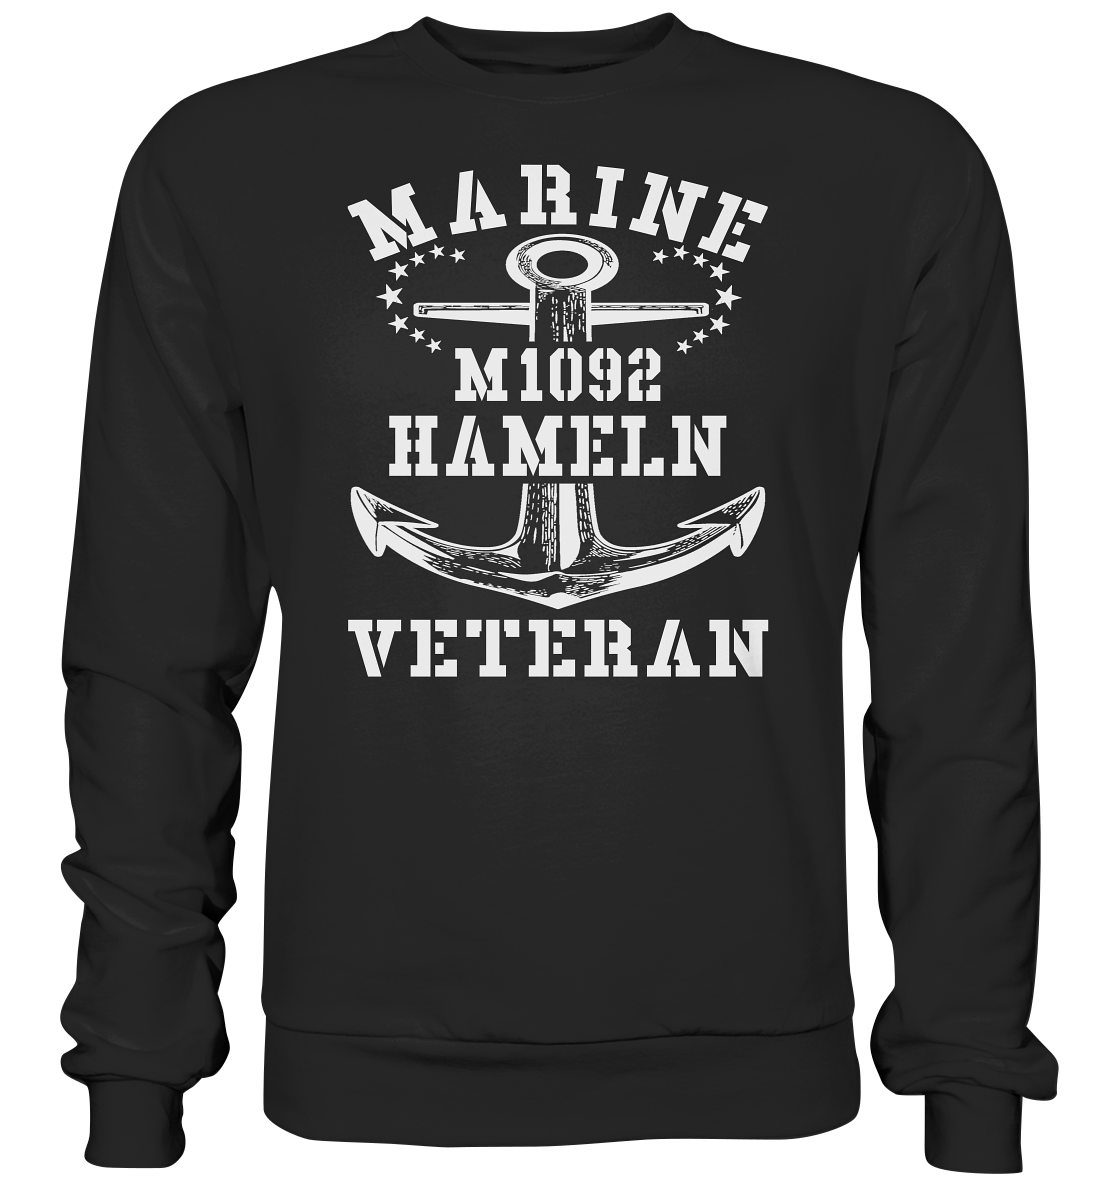 M1092 HAMELN Marine Veteran - Premium Sweatshirt